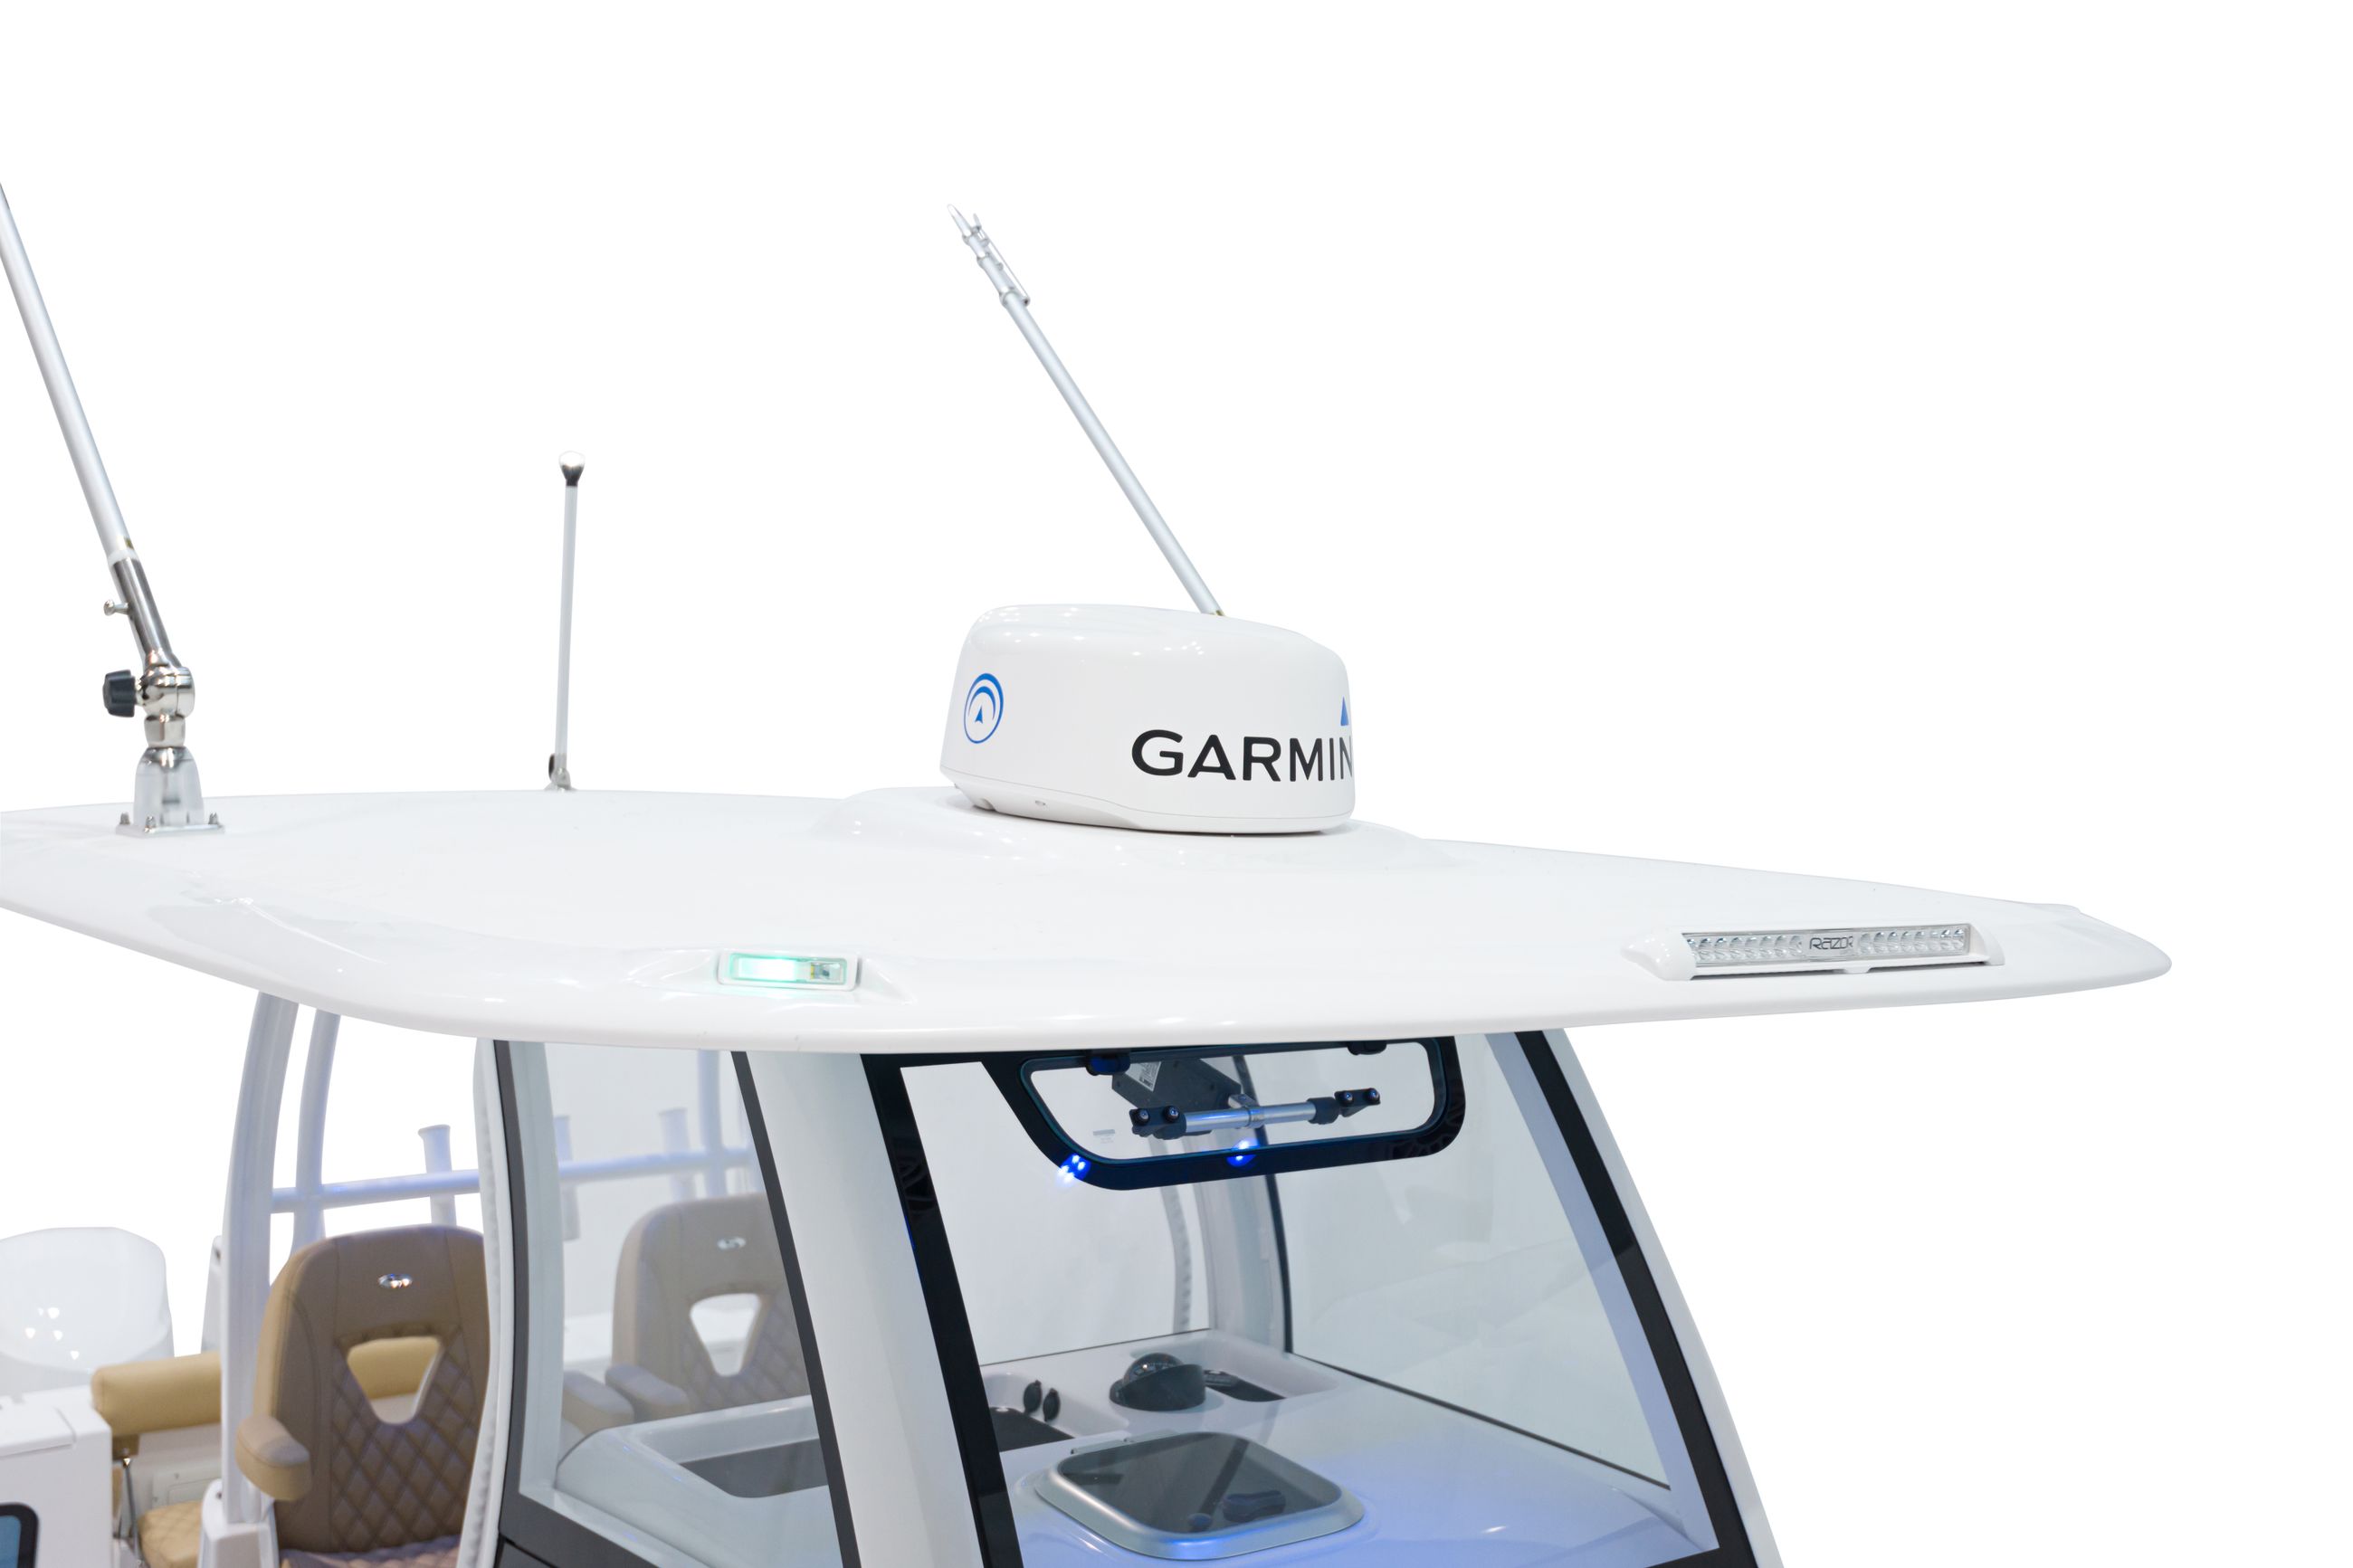 Detail image of Garmin GMR™ Fantom 18x Radome